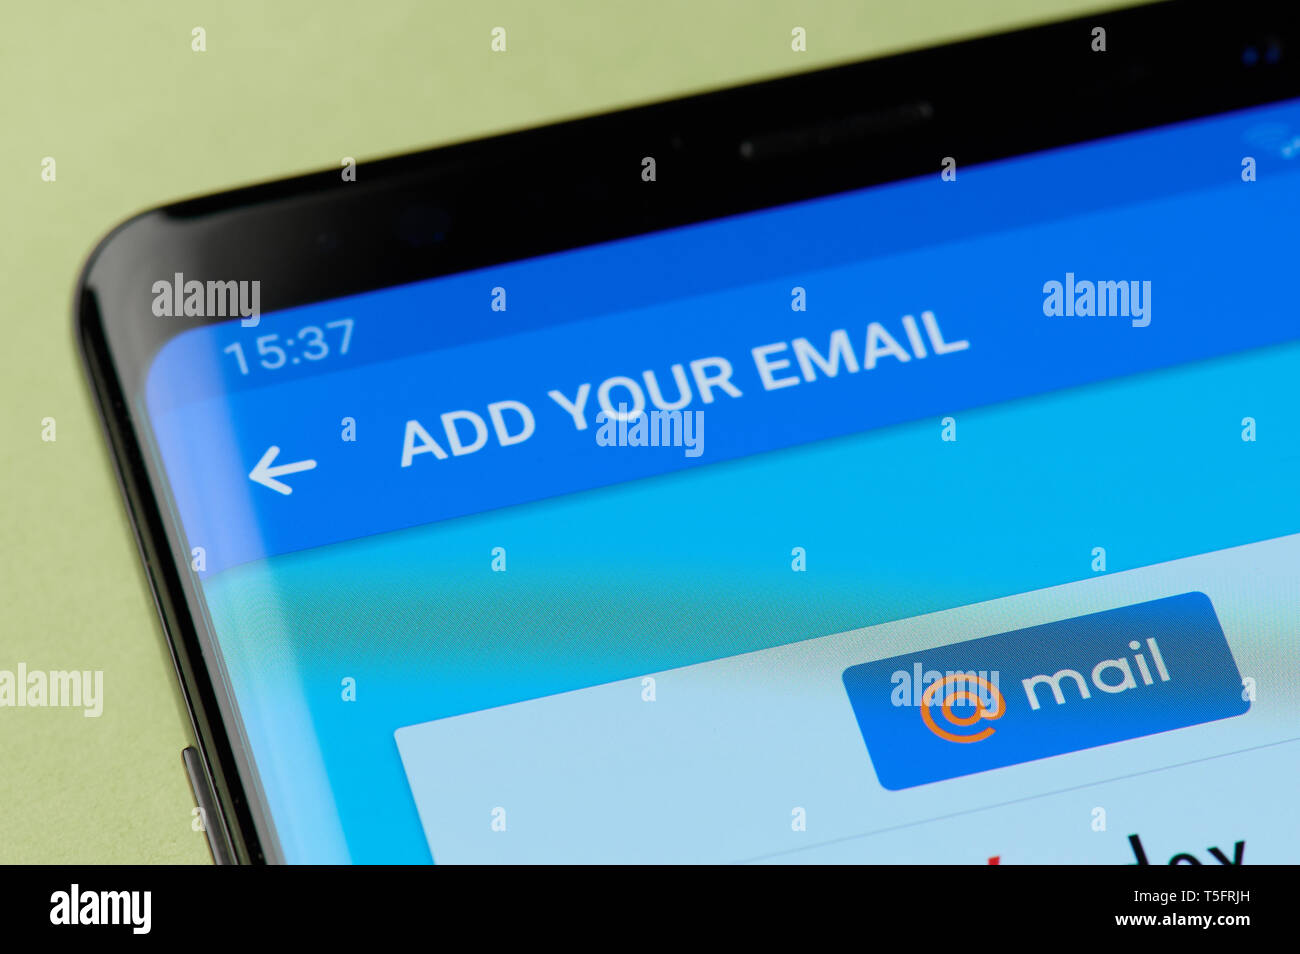 New york, USA - april 22, 2019: Adding mailru email interface on smartphone screen Stock Photo